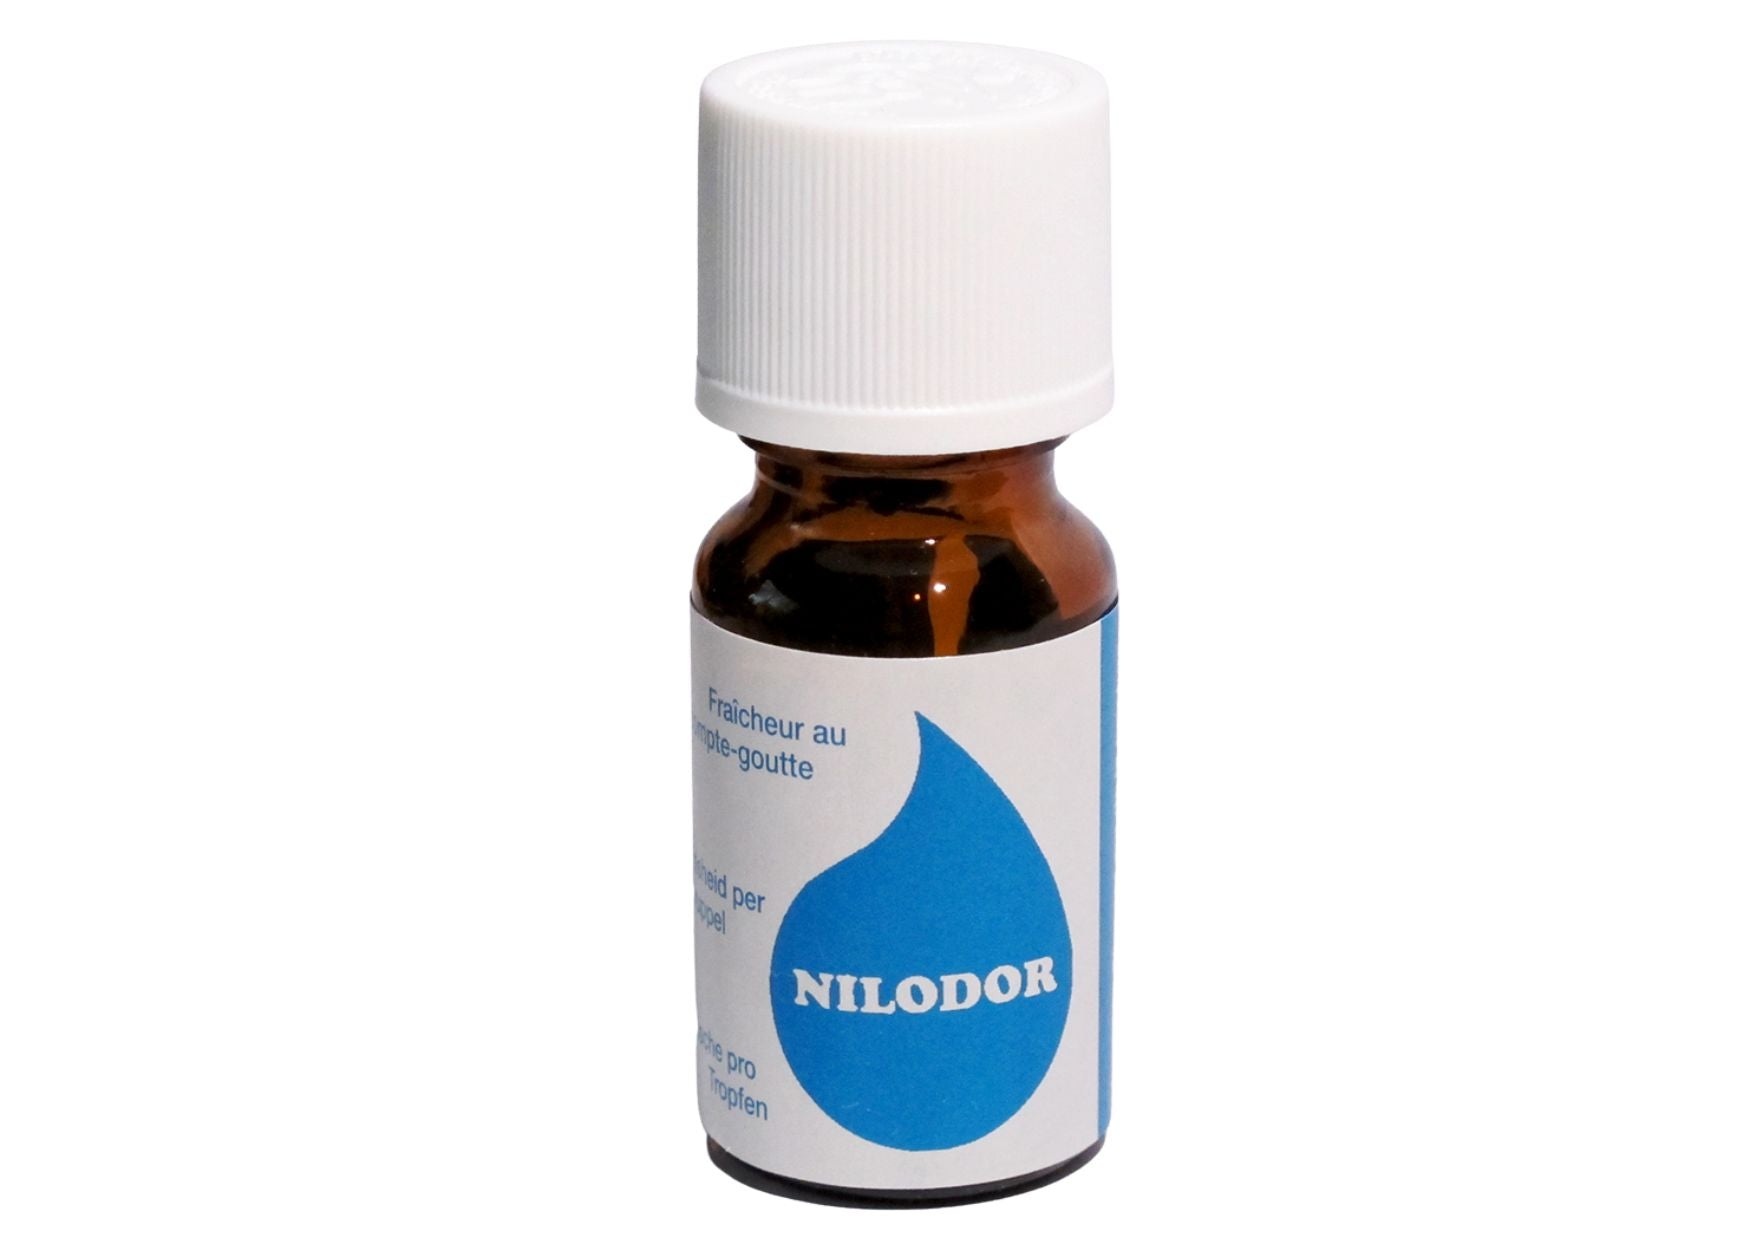 Nilodor drops concentrate herbal odor eliminator